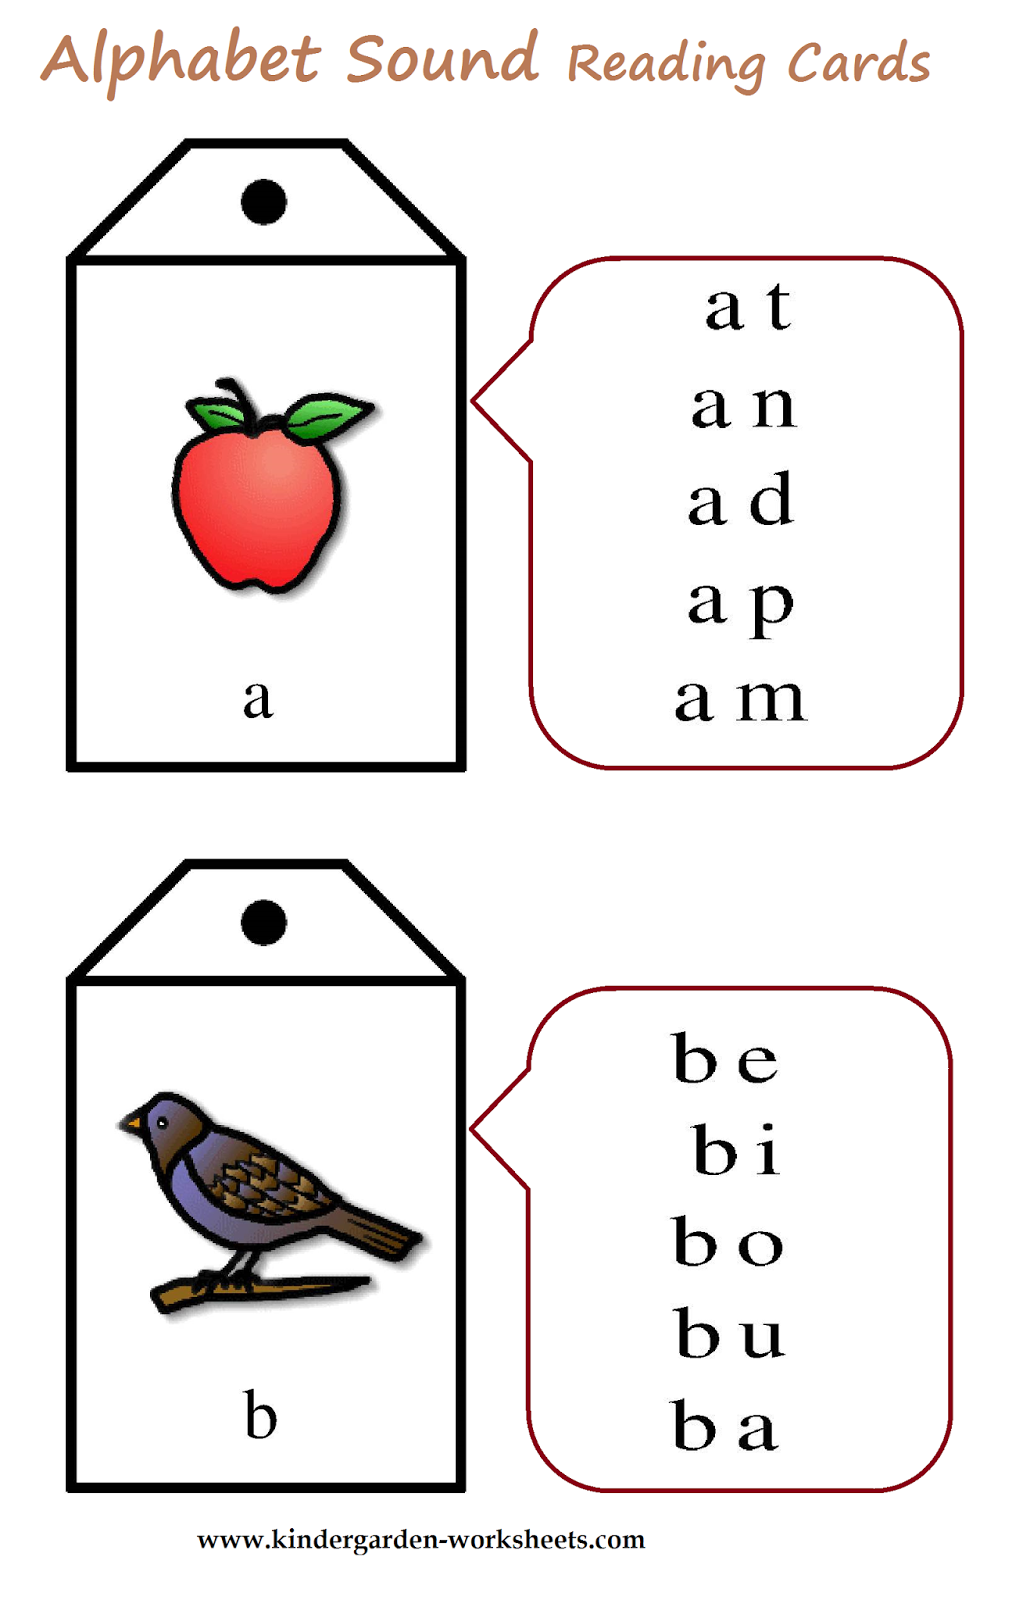 kindergarten-worksheets-alphabet-sound-read-cards